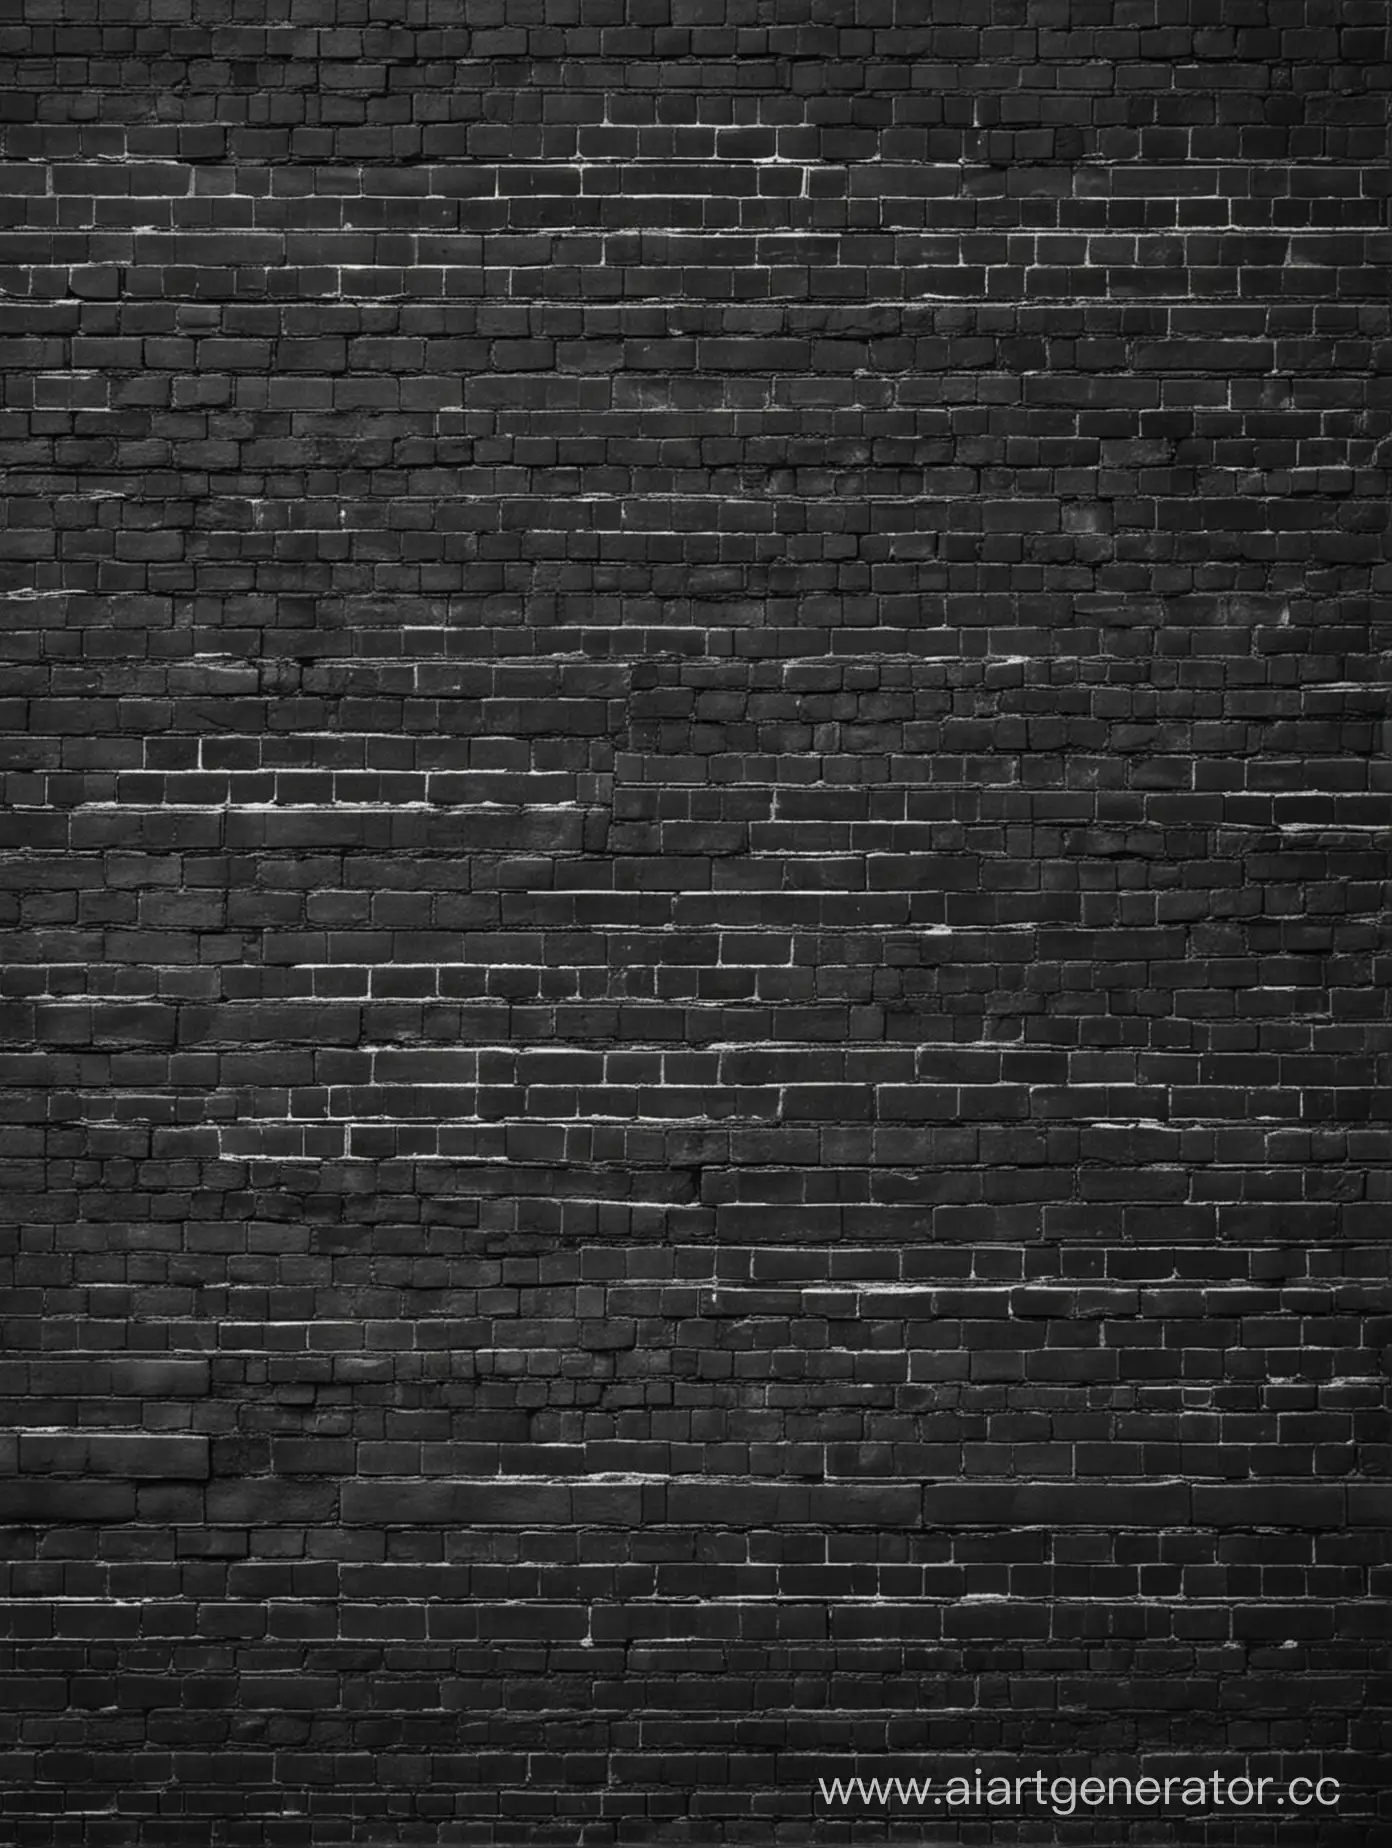 Mysterious-Noir-Noir-Scene-Black-Brick-Wall